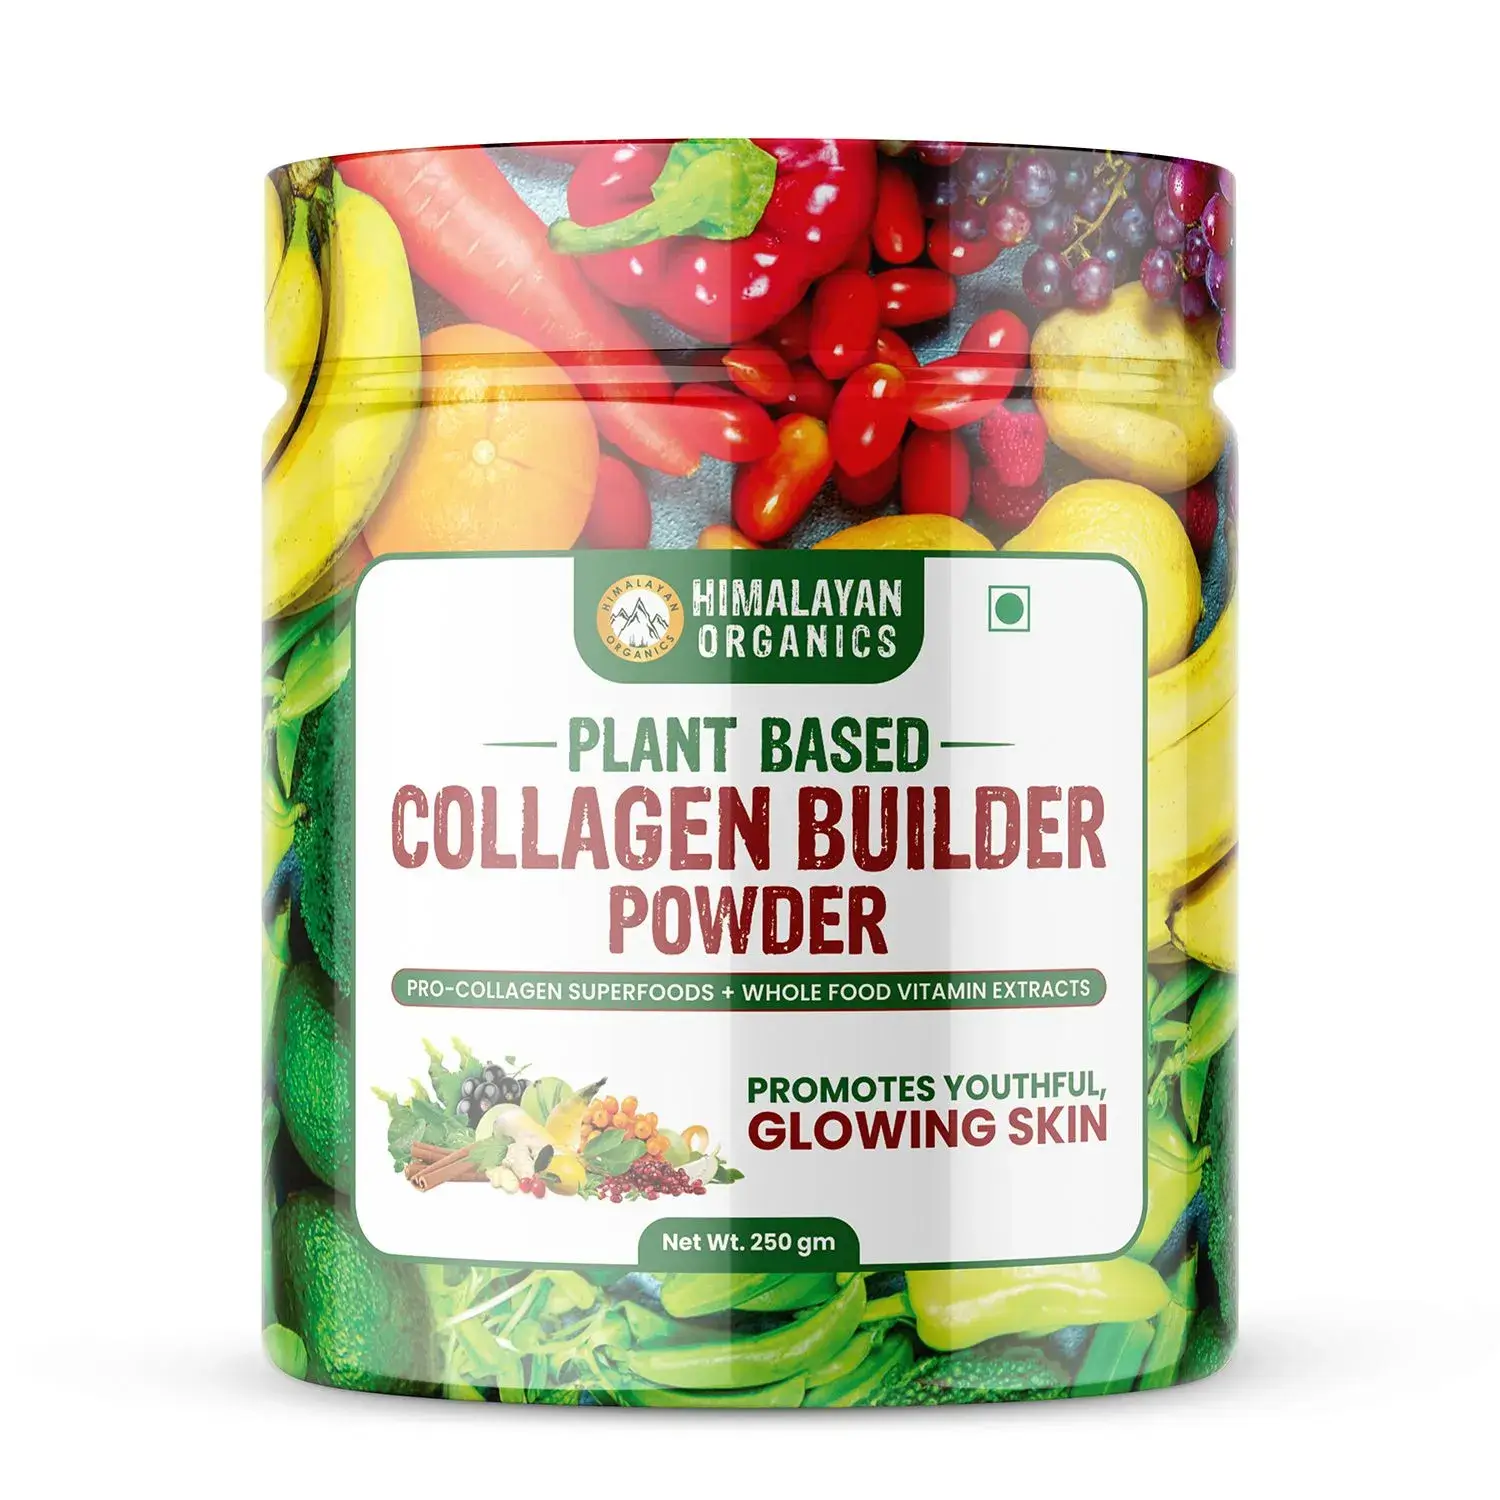 Himalayan Organics Plant Based Collagen Builder Powder for Skin Regeneration, Anti-Aging Beauty & Repair (with Sea Buckthorn,Evening Primrose, Acai Berry) – 250gm